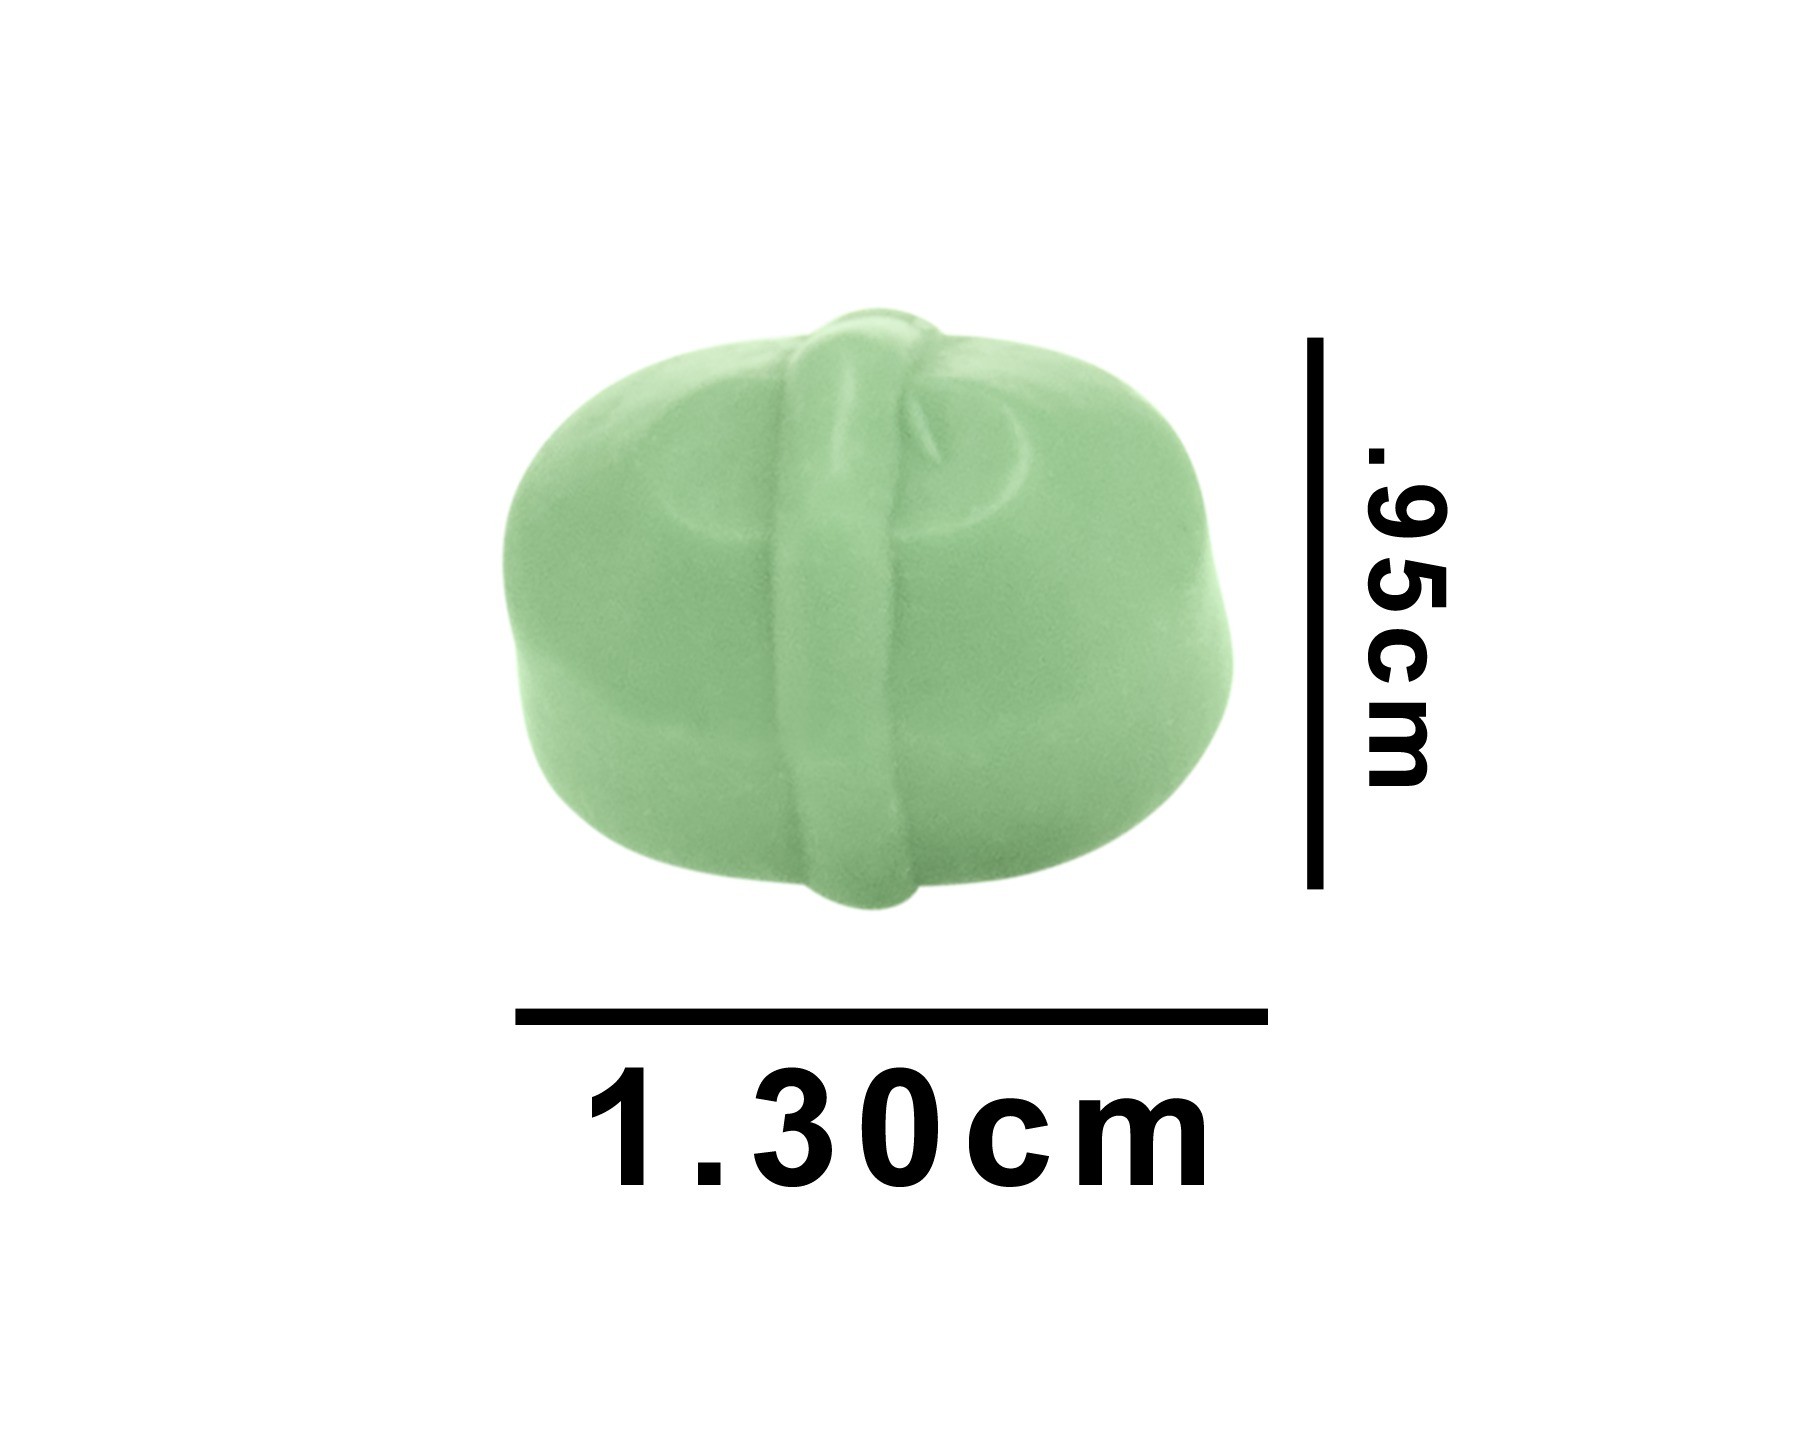 SP Bel-Art Spinbar Rare Earth Teflon Octagon Magnetic Stirring Bar; 1.30 x 0.95cm, Green